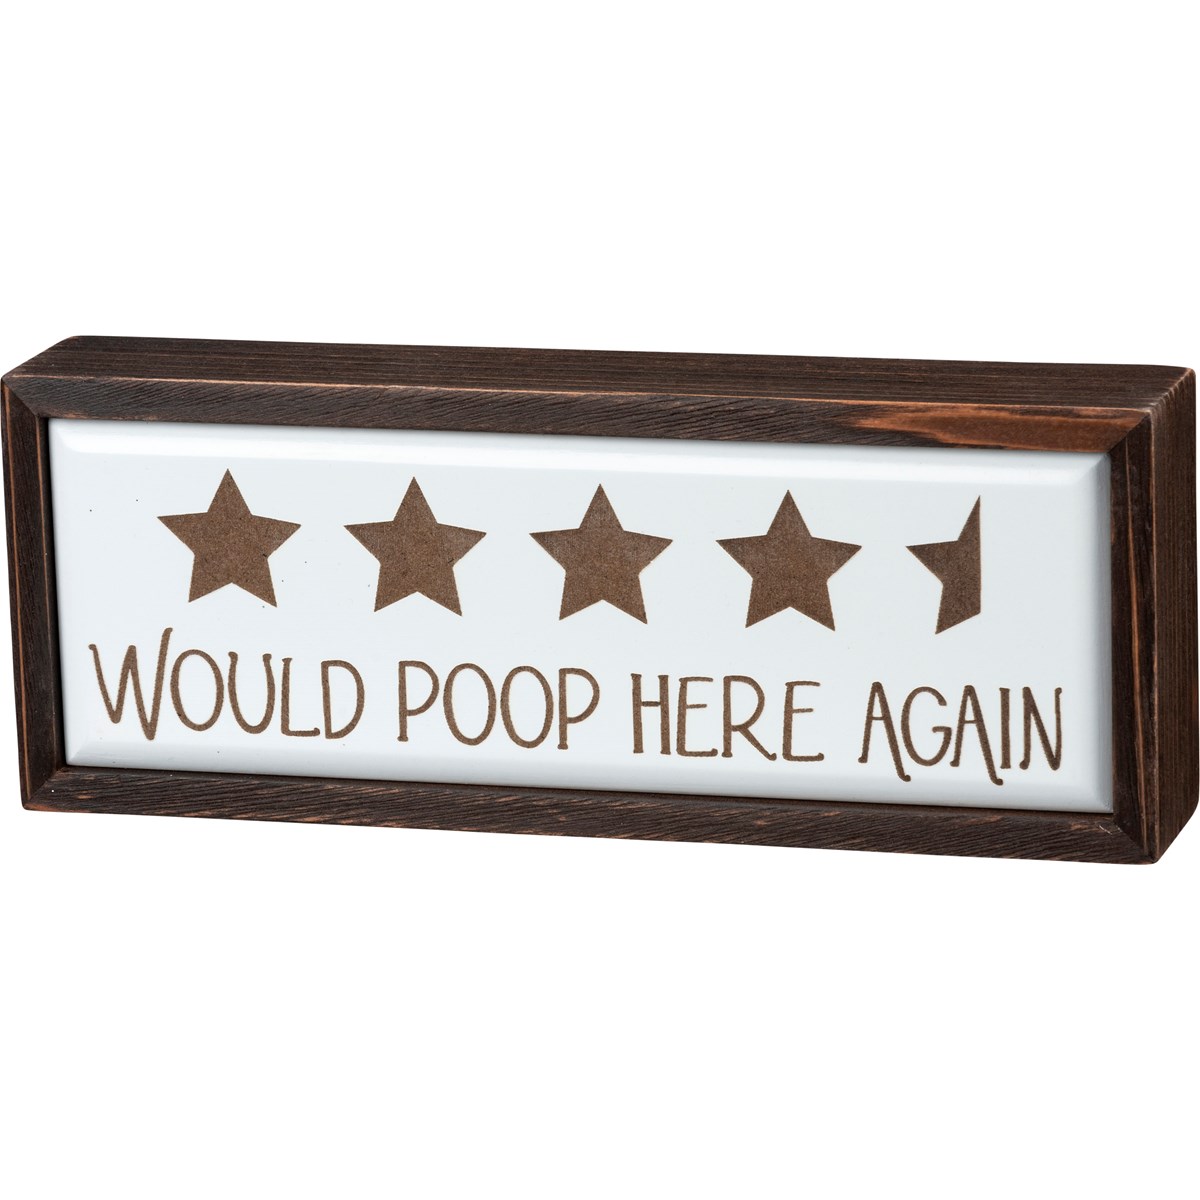 Box Sign - Would Poop Here Again - 9.75" x 3.75" x 1.75" - Wood